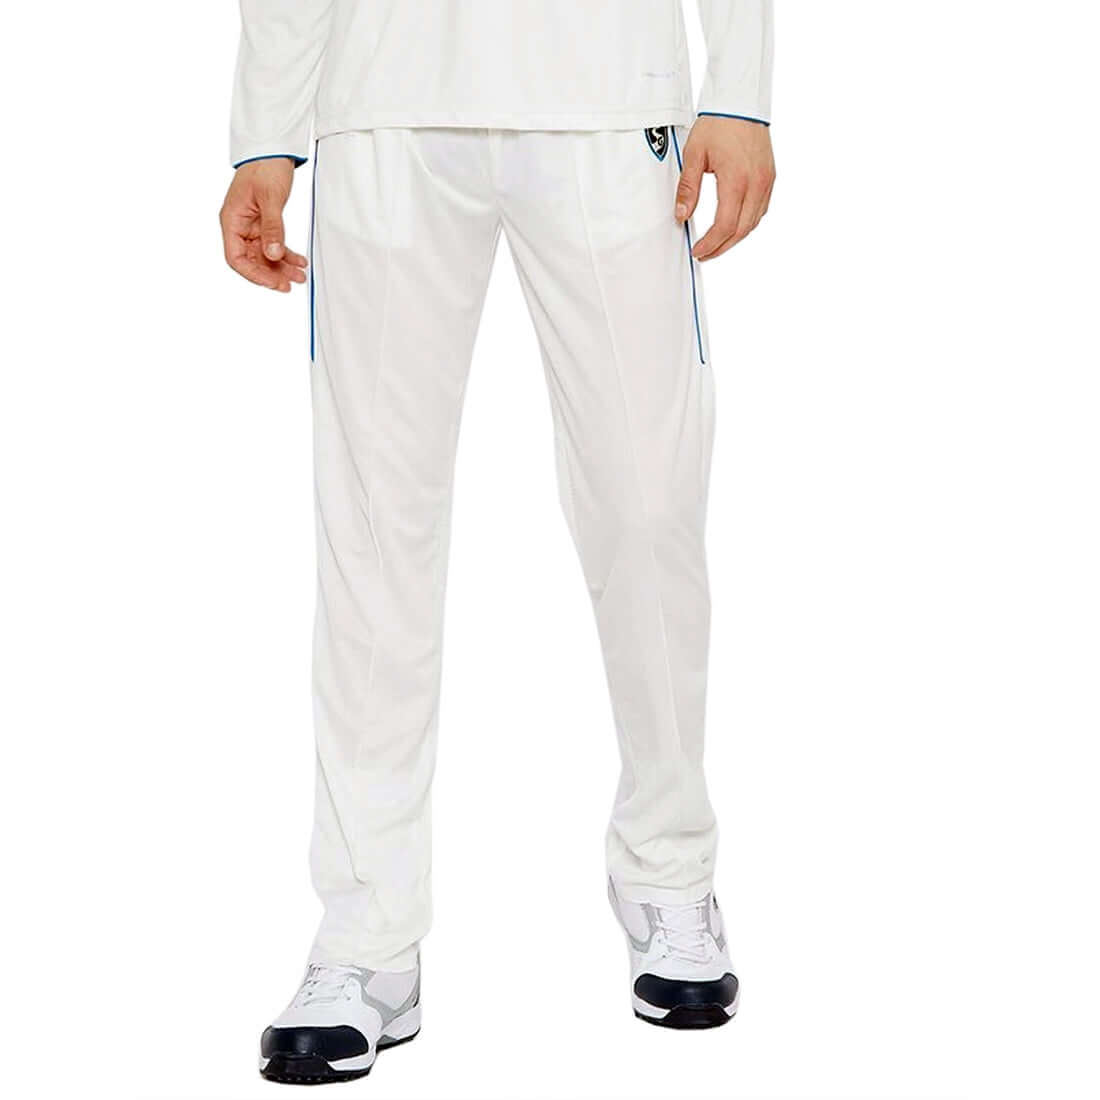 SG Premium 2.0 Cricket Trousers 1